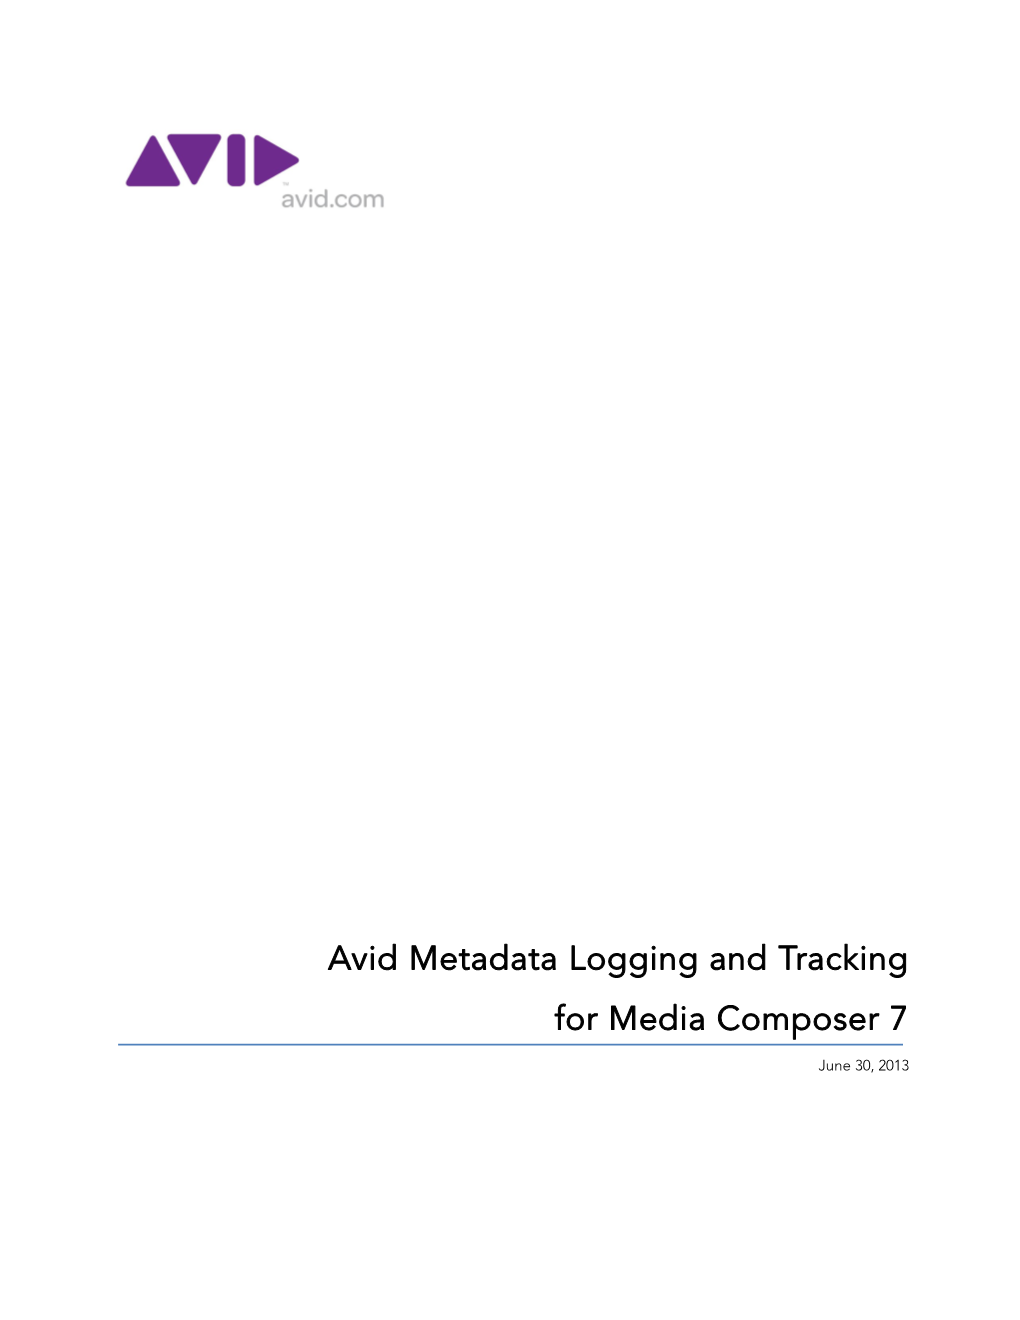 Avid Metadata Logging and Tracking for Media Composer 7